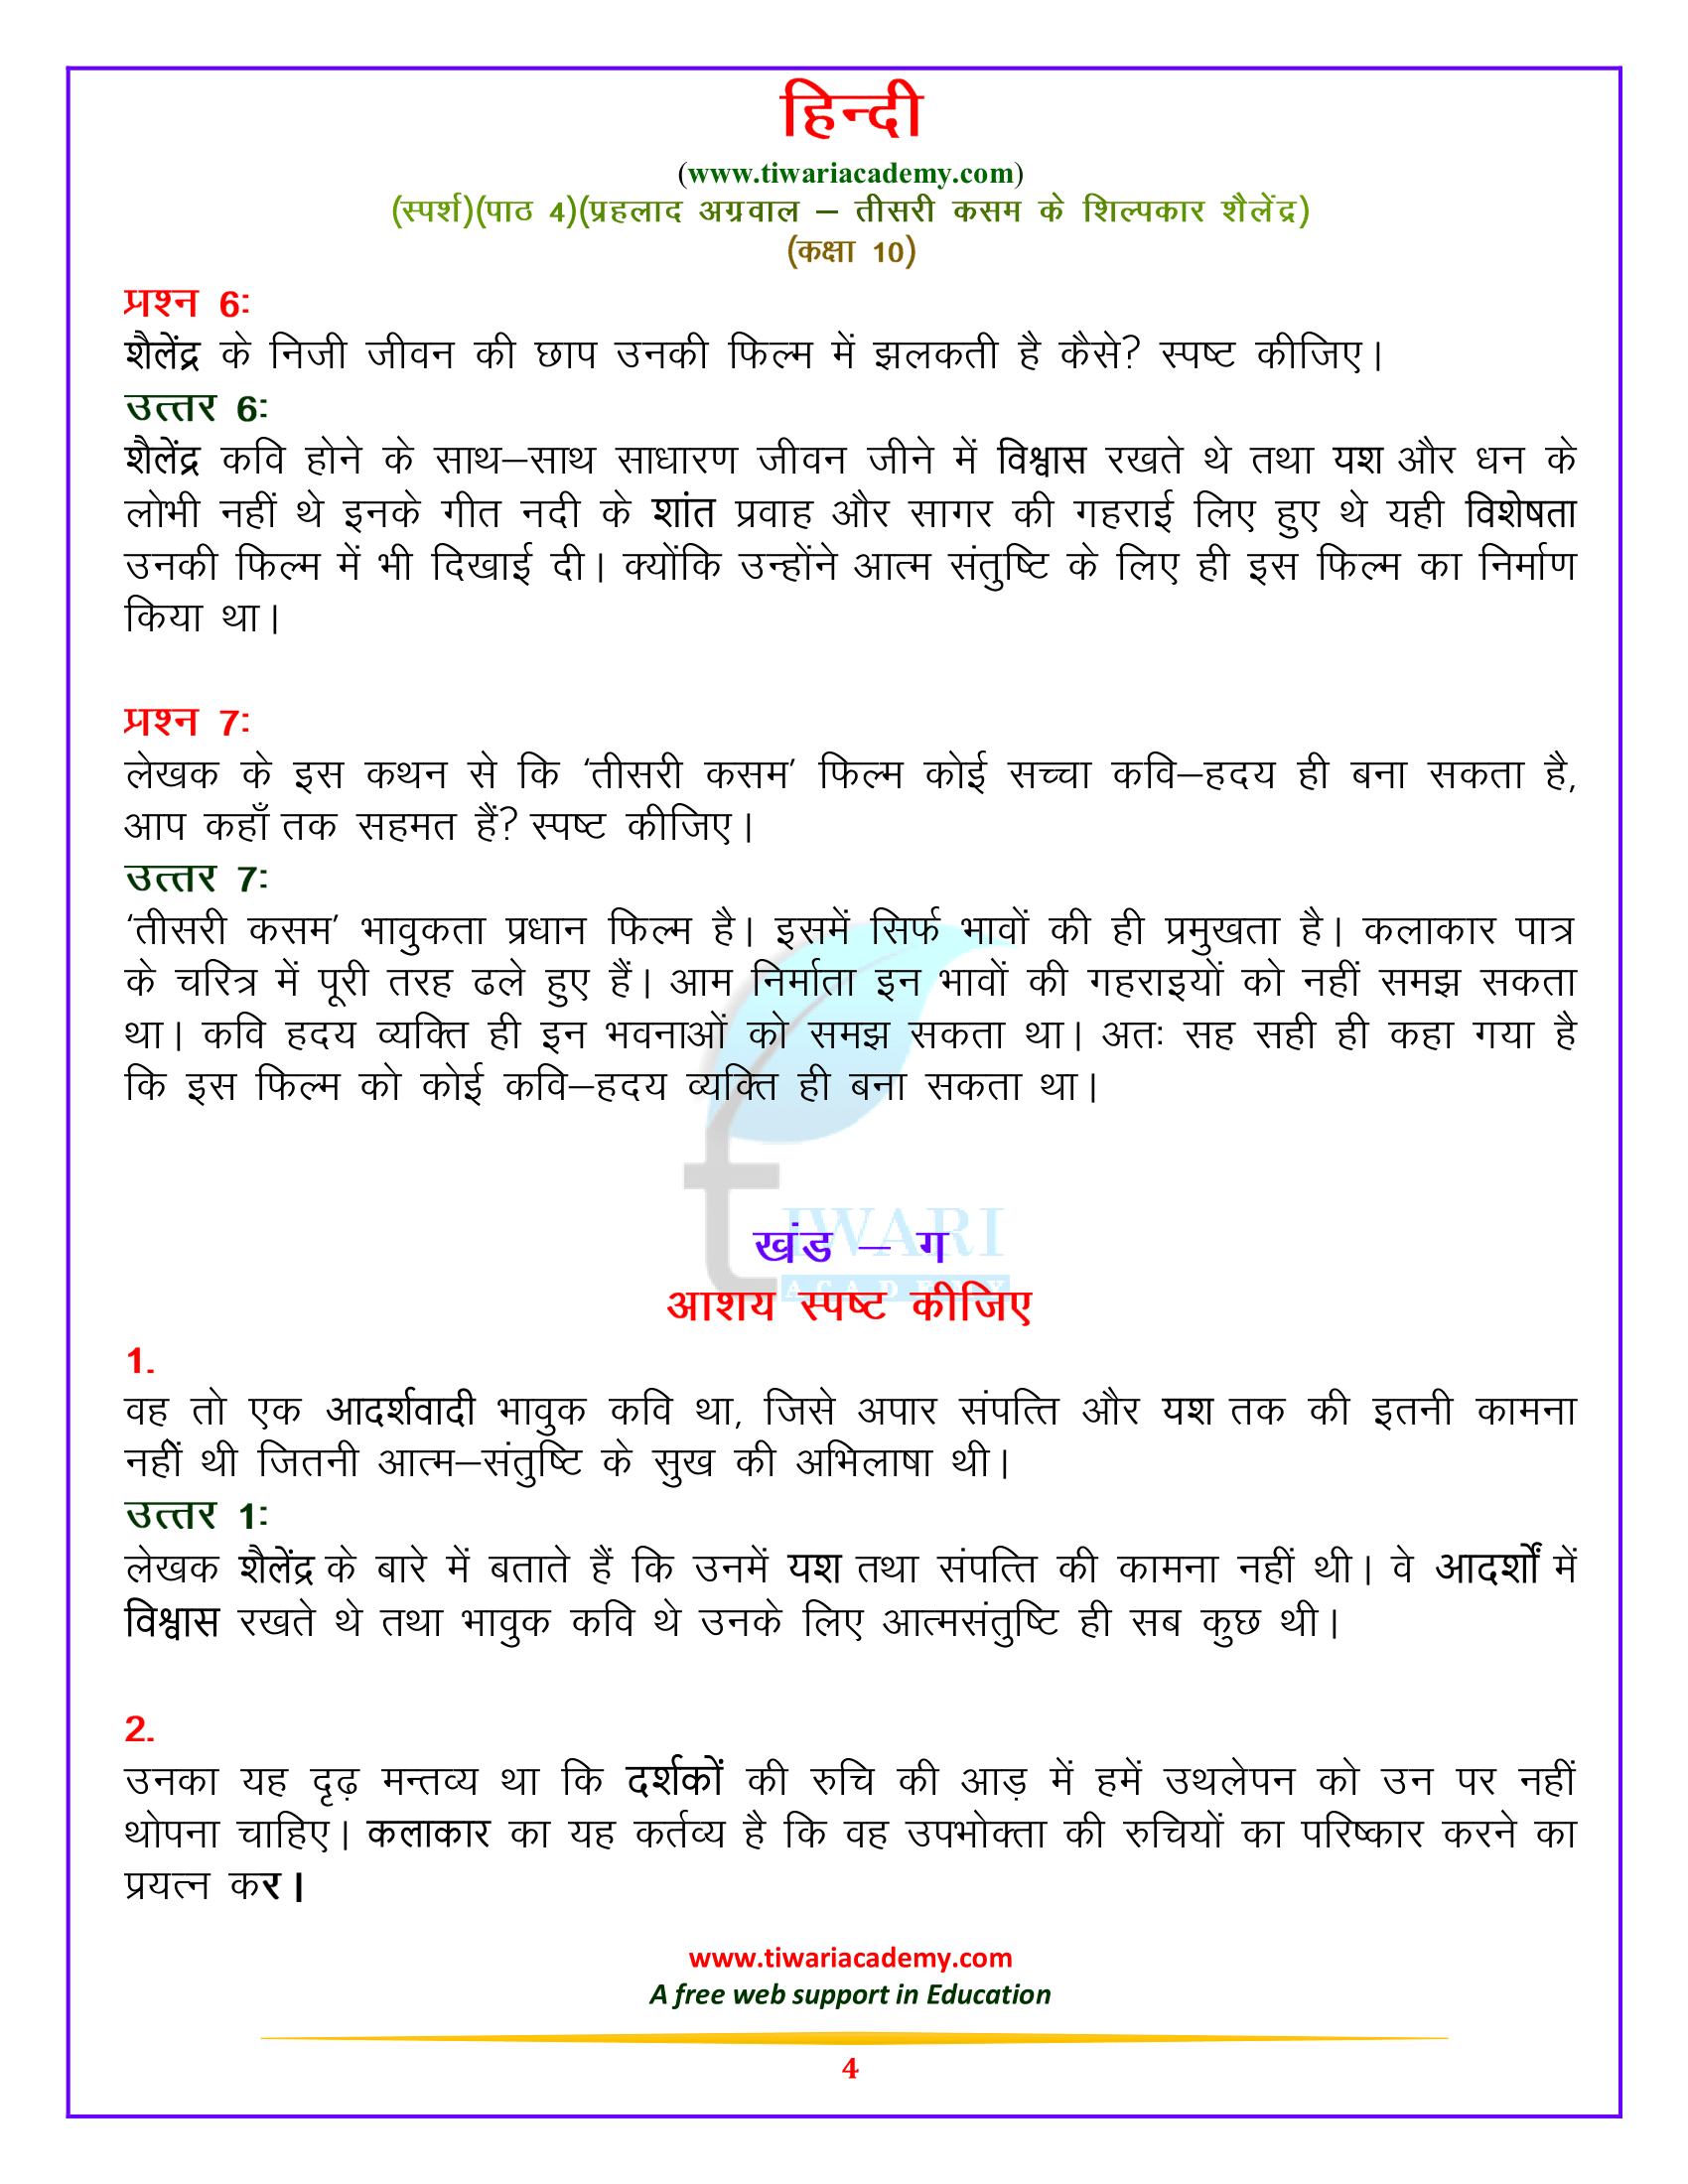 कक्षा 10 हिन्दी स्पर्श पाठ 4